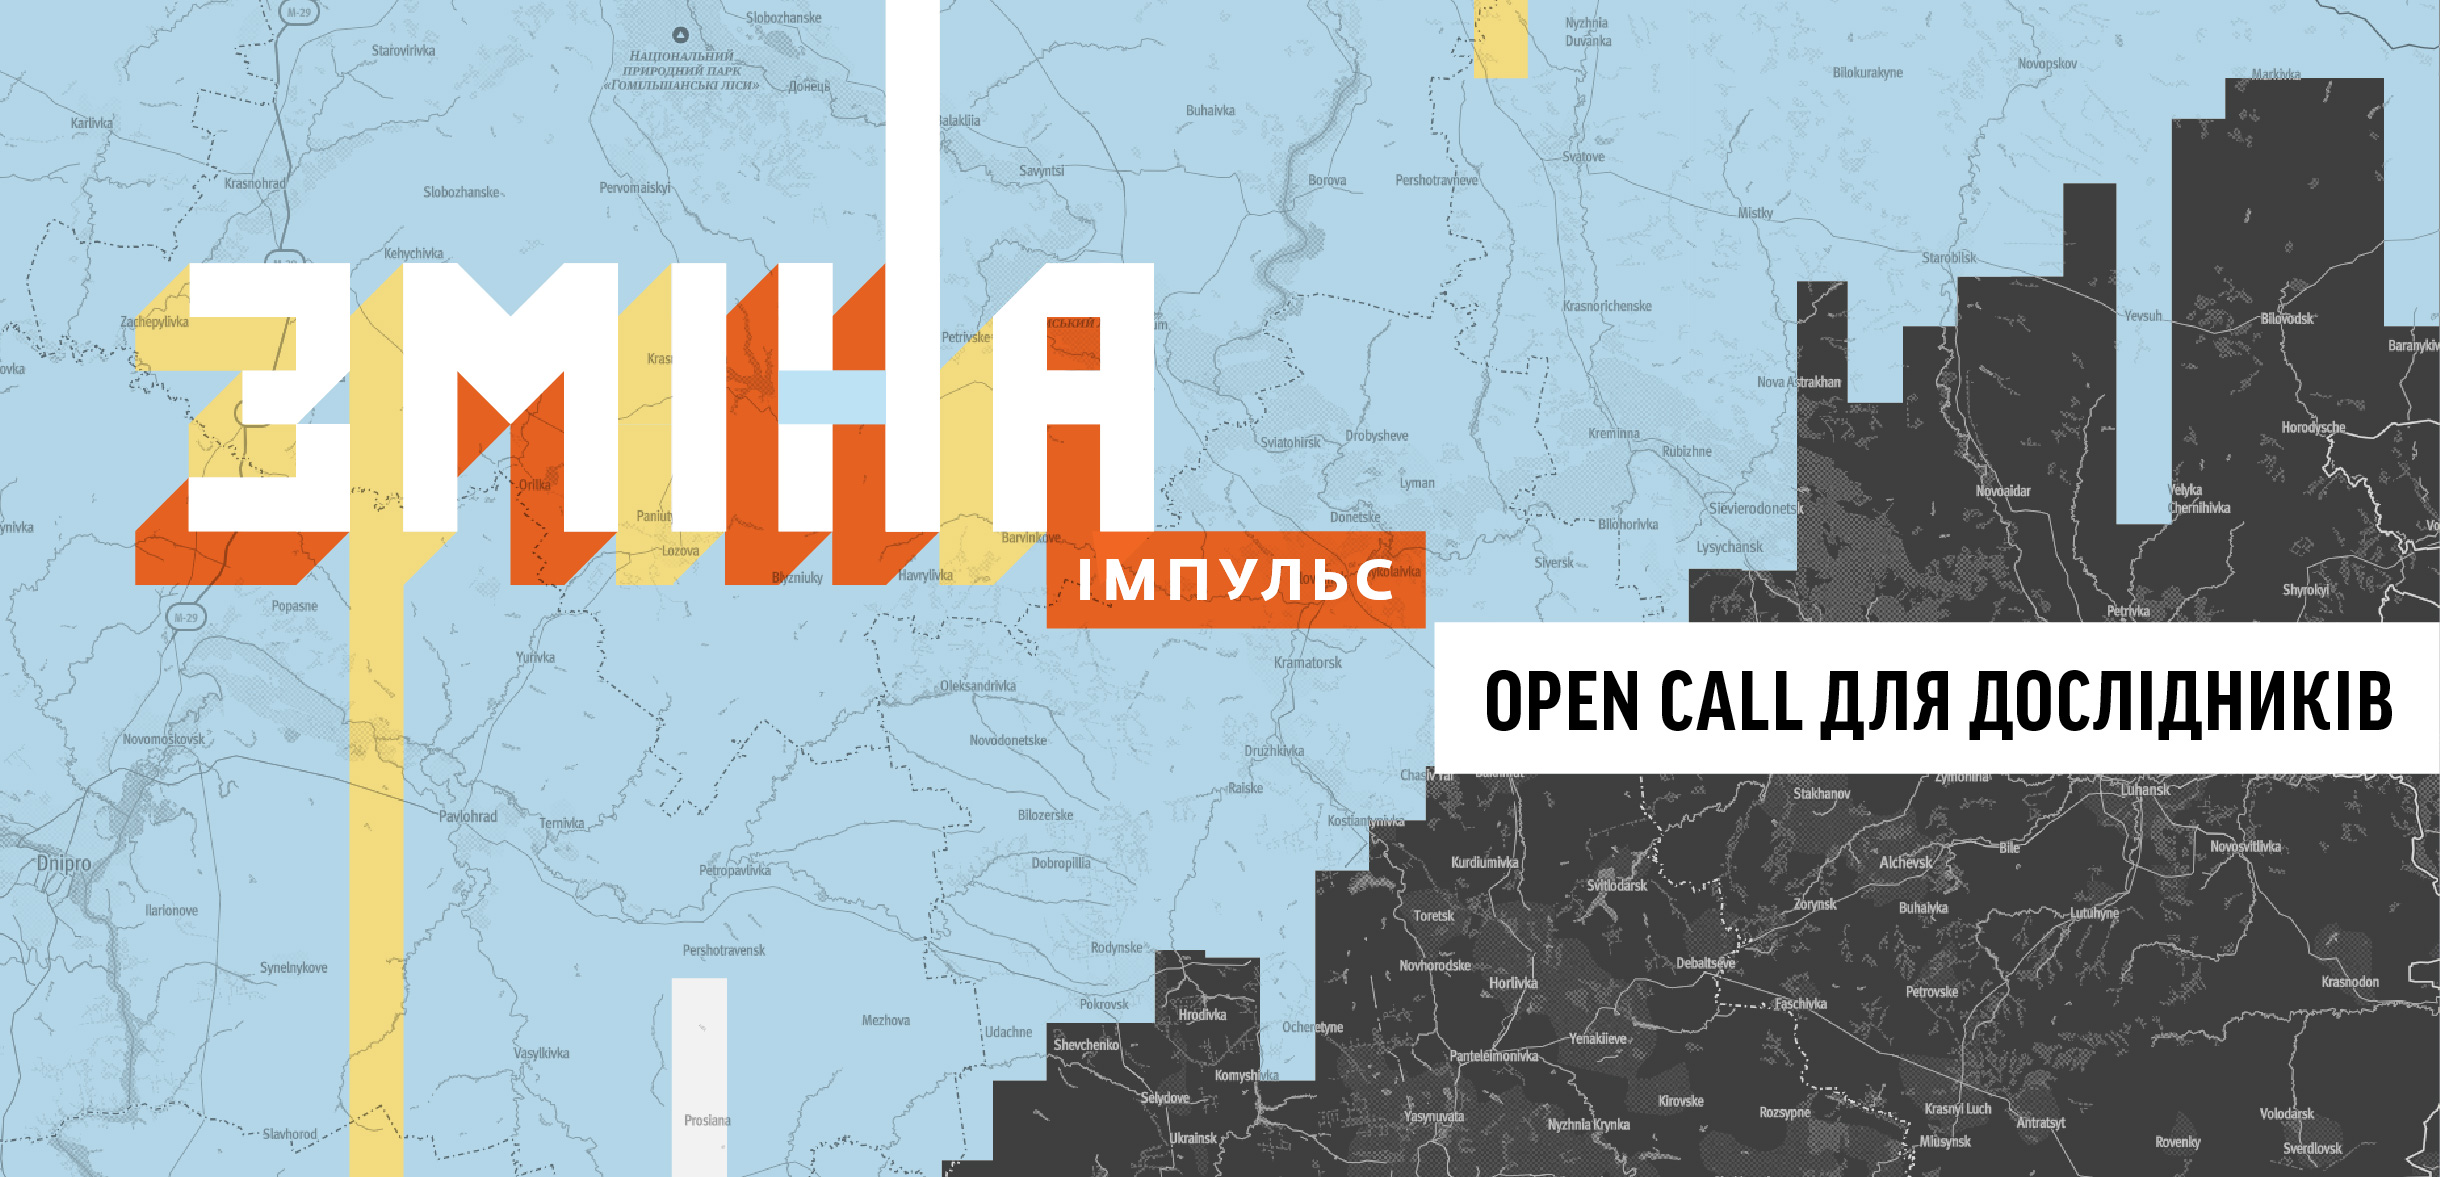 ZMINA: Impulse – Open call for researchers 